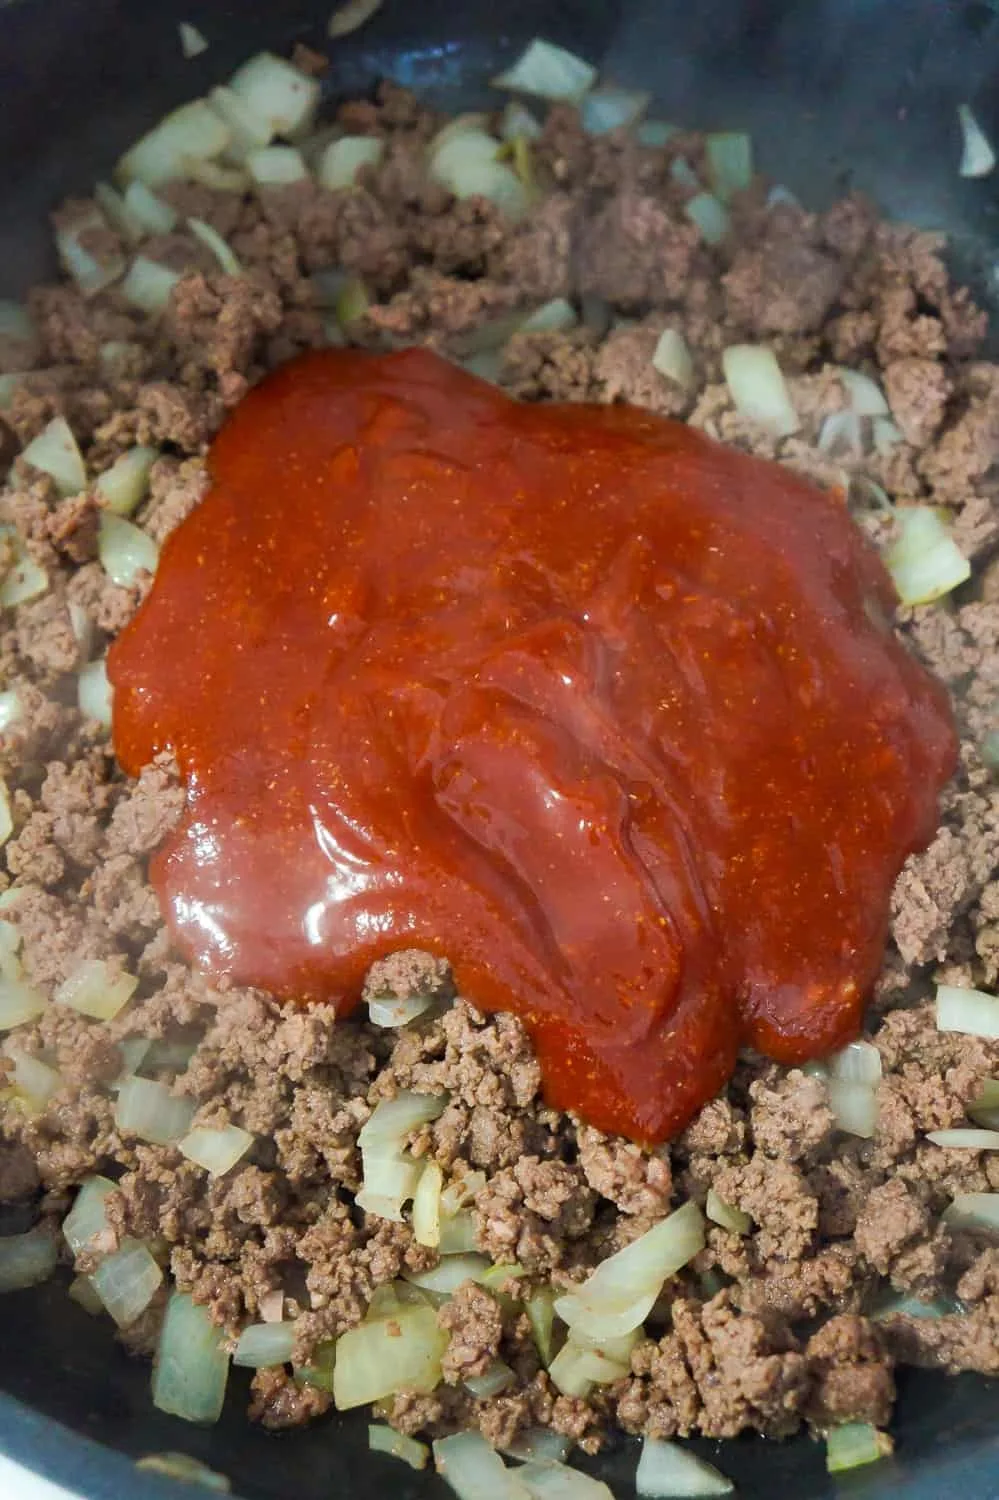 sloppy joe sauce on top of ground beef in a frying pan